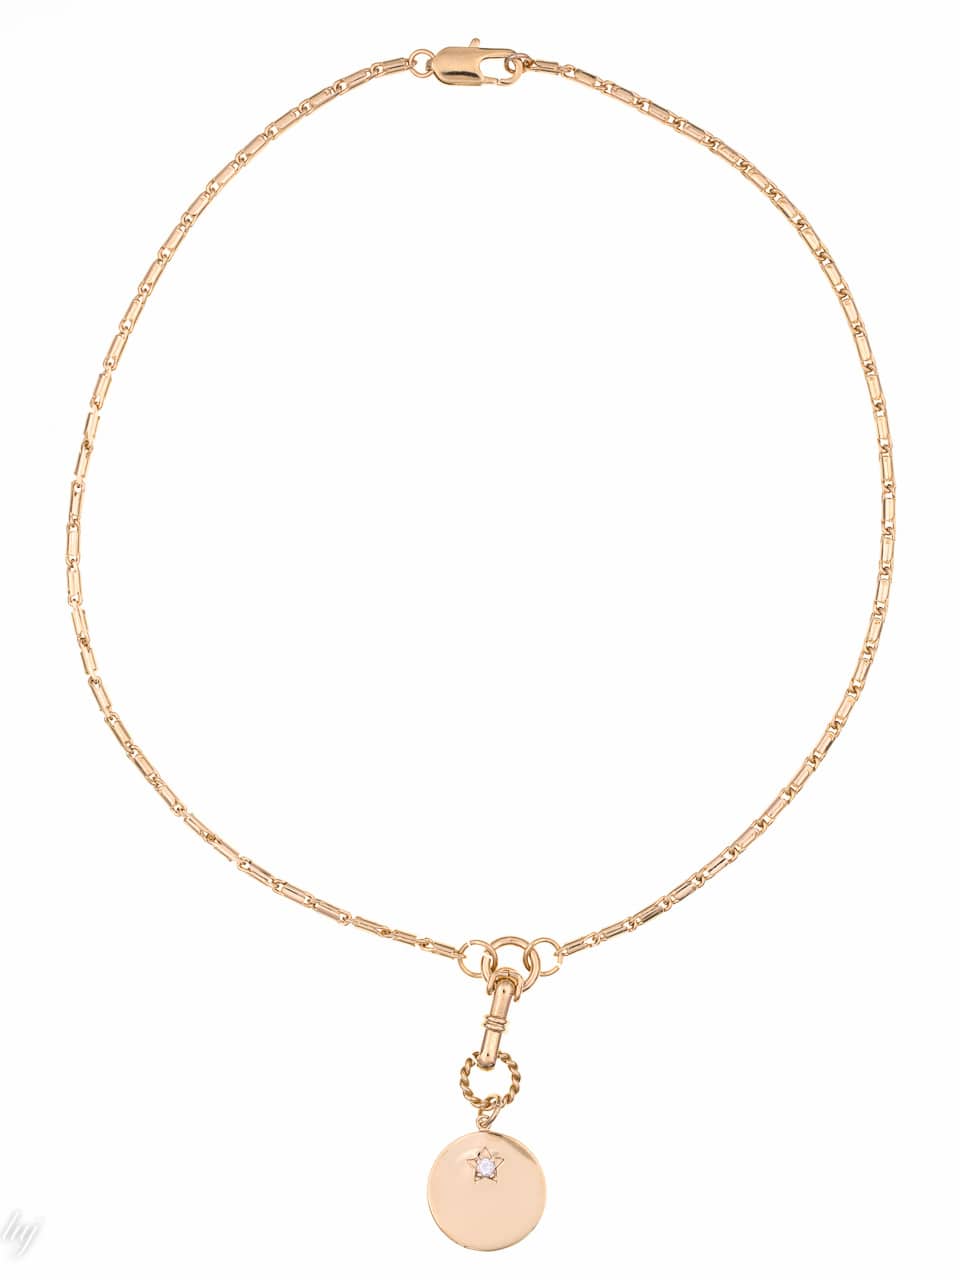 izia-necklace-luj-paris-jewels